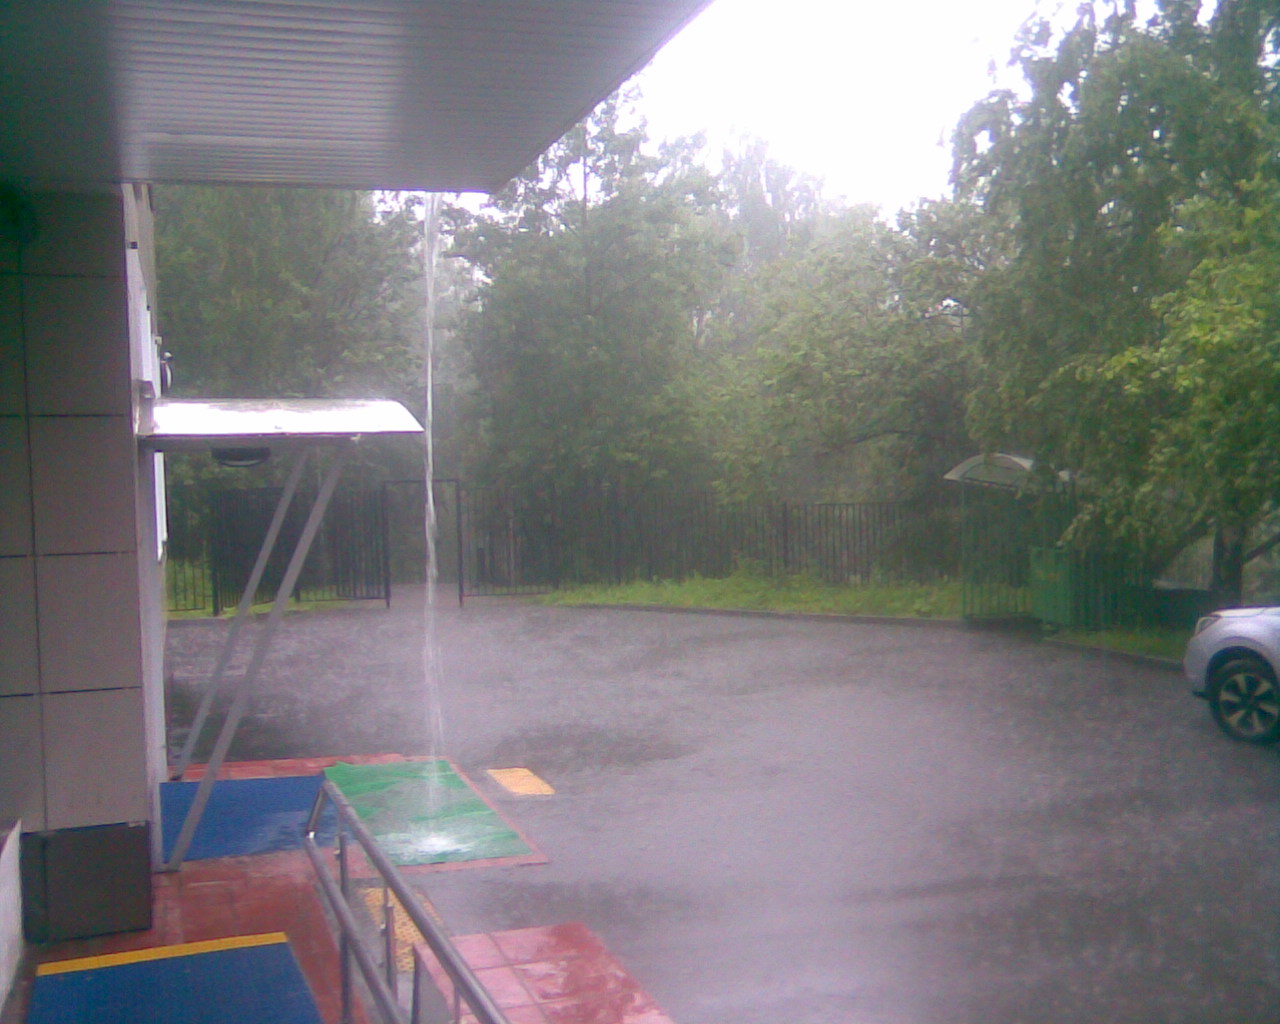 Rain2.jpg